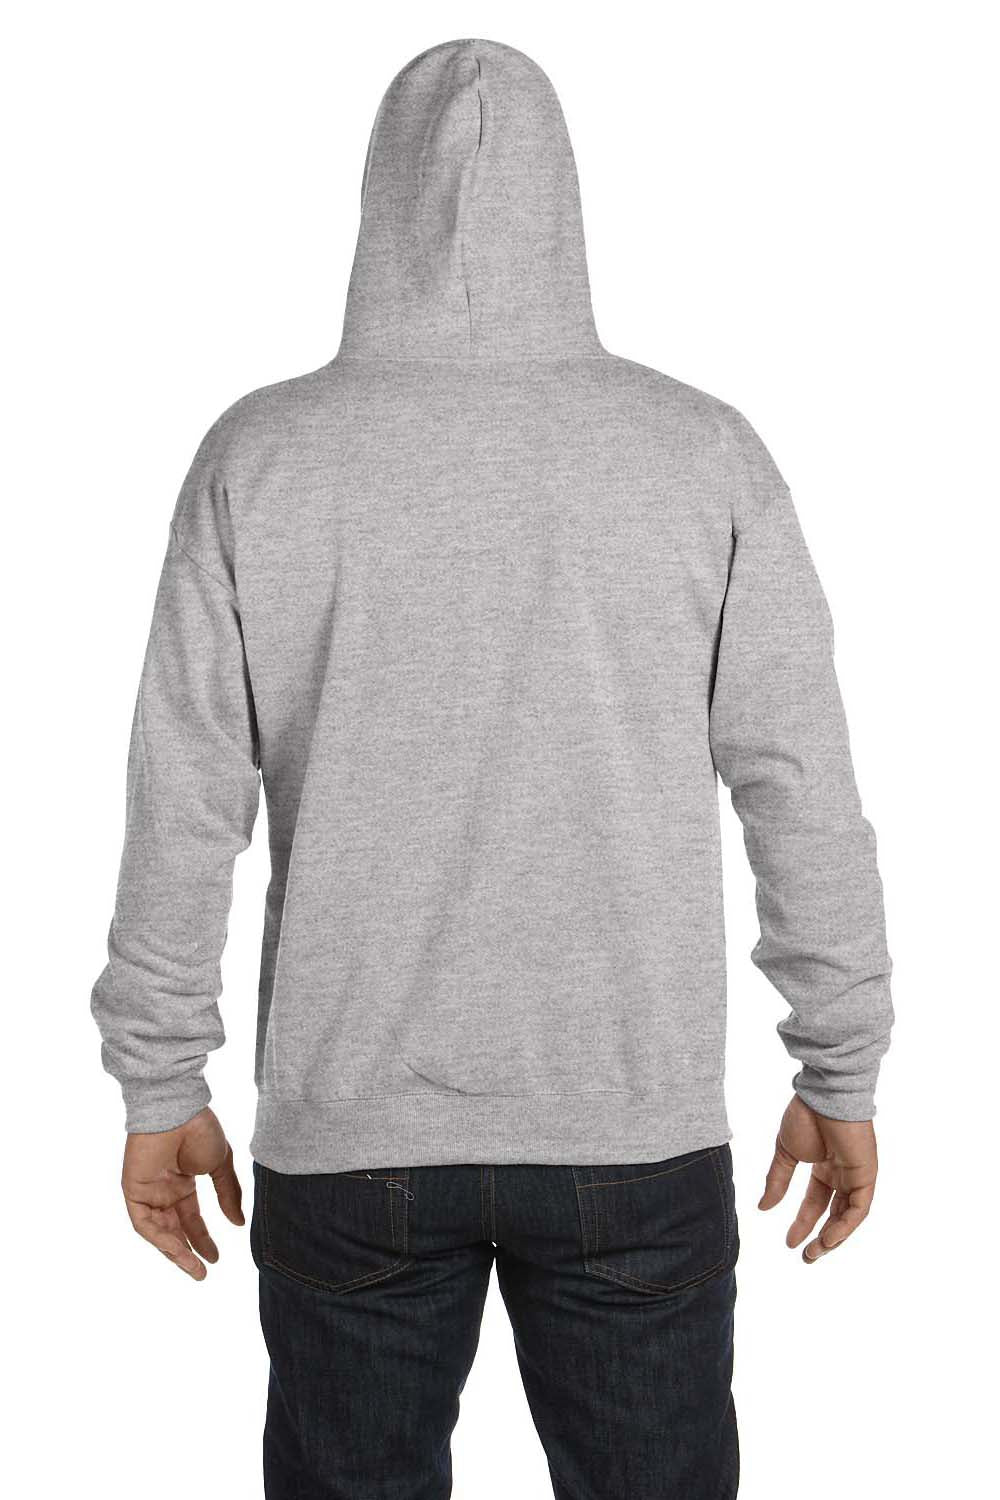 Hanes P180 Mens EcoSmart Print Pro XP Full Zip Hooded Sweatshirt Hoodie Light Steel Grey Back